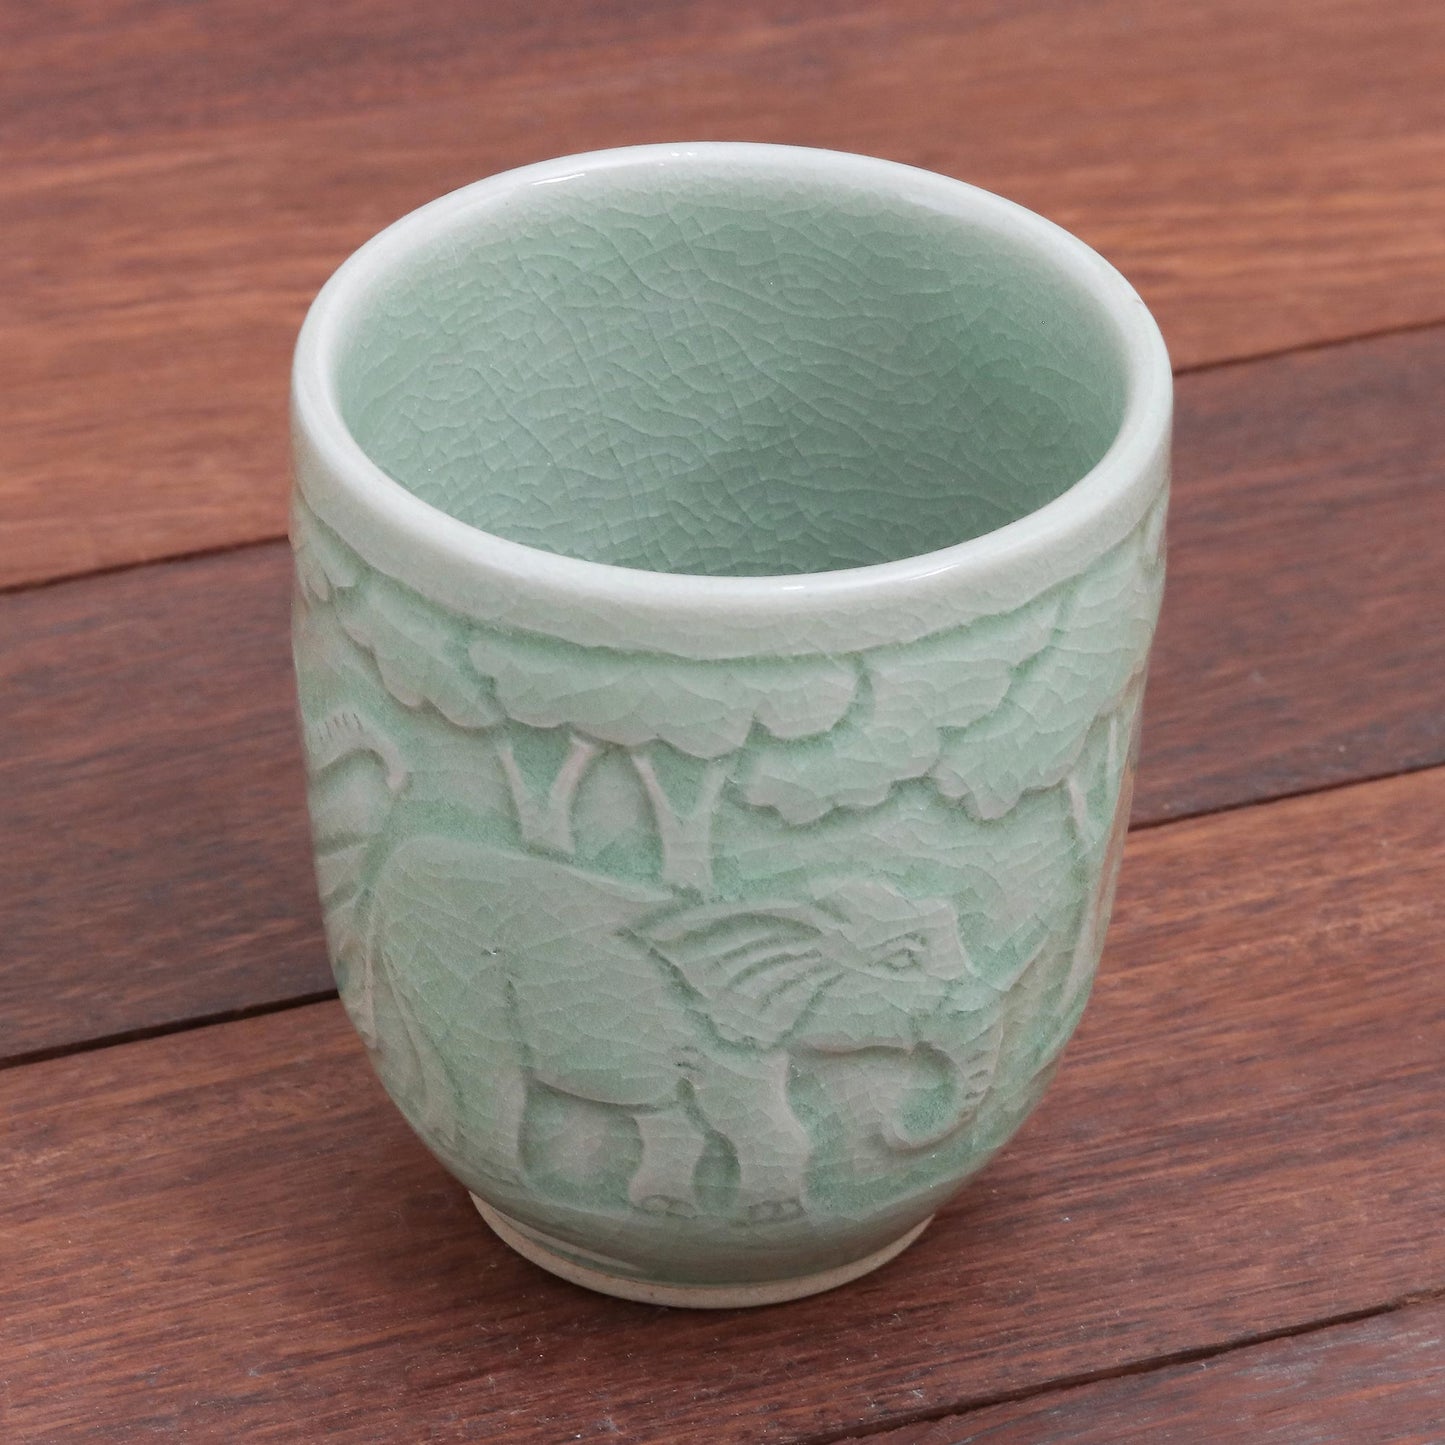 Elephant Forest Elephant-Themed Celadon Ceramic Teacup from Thailand